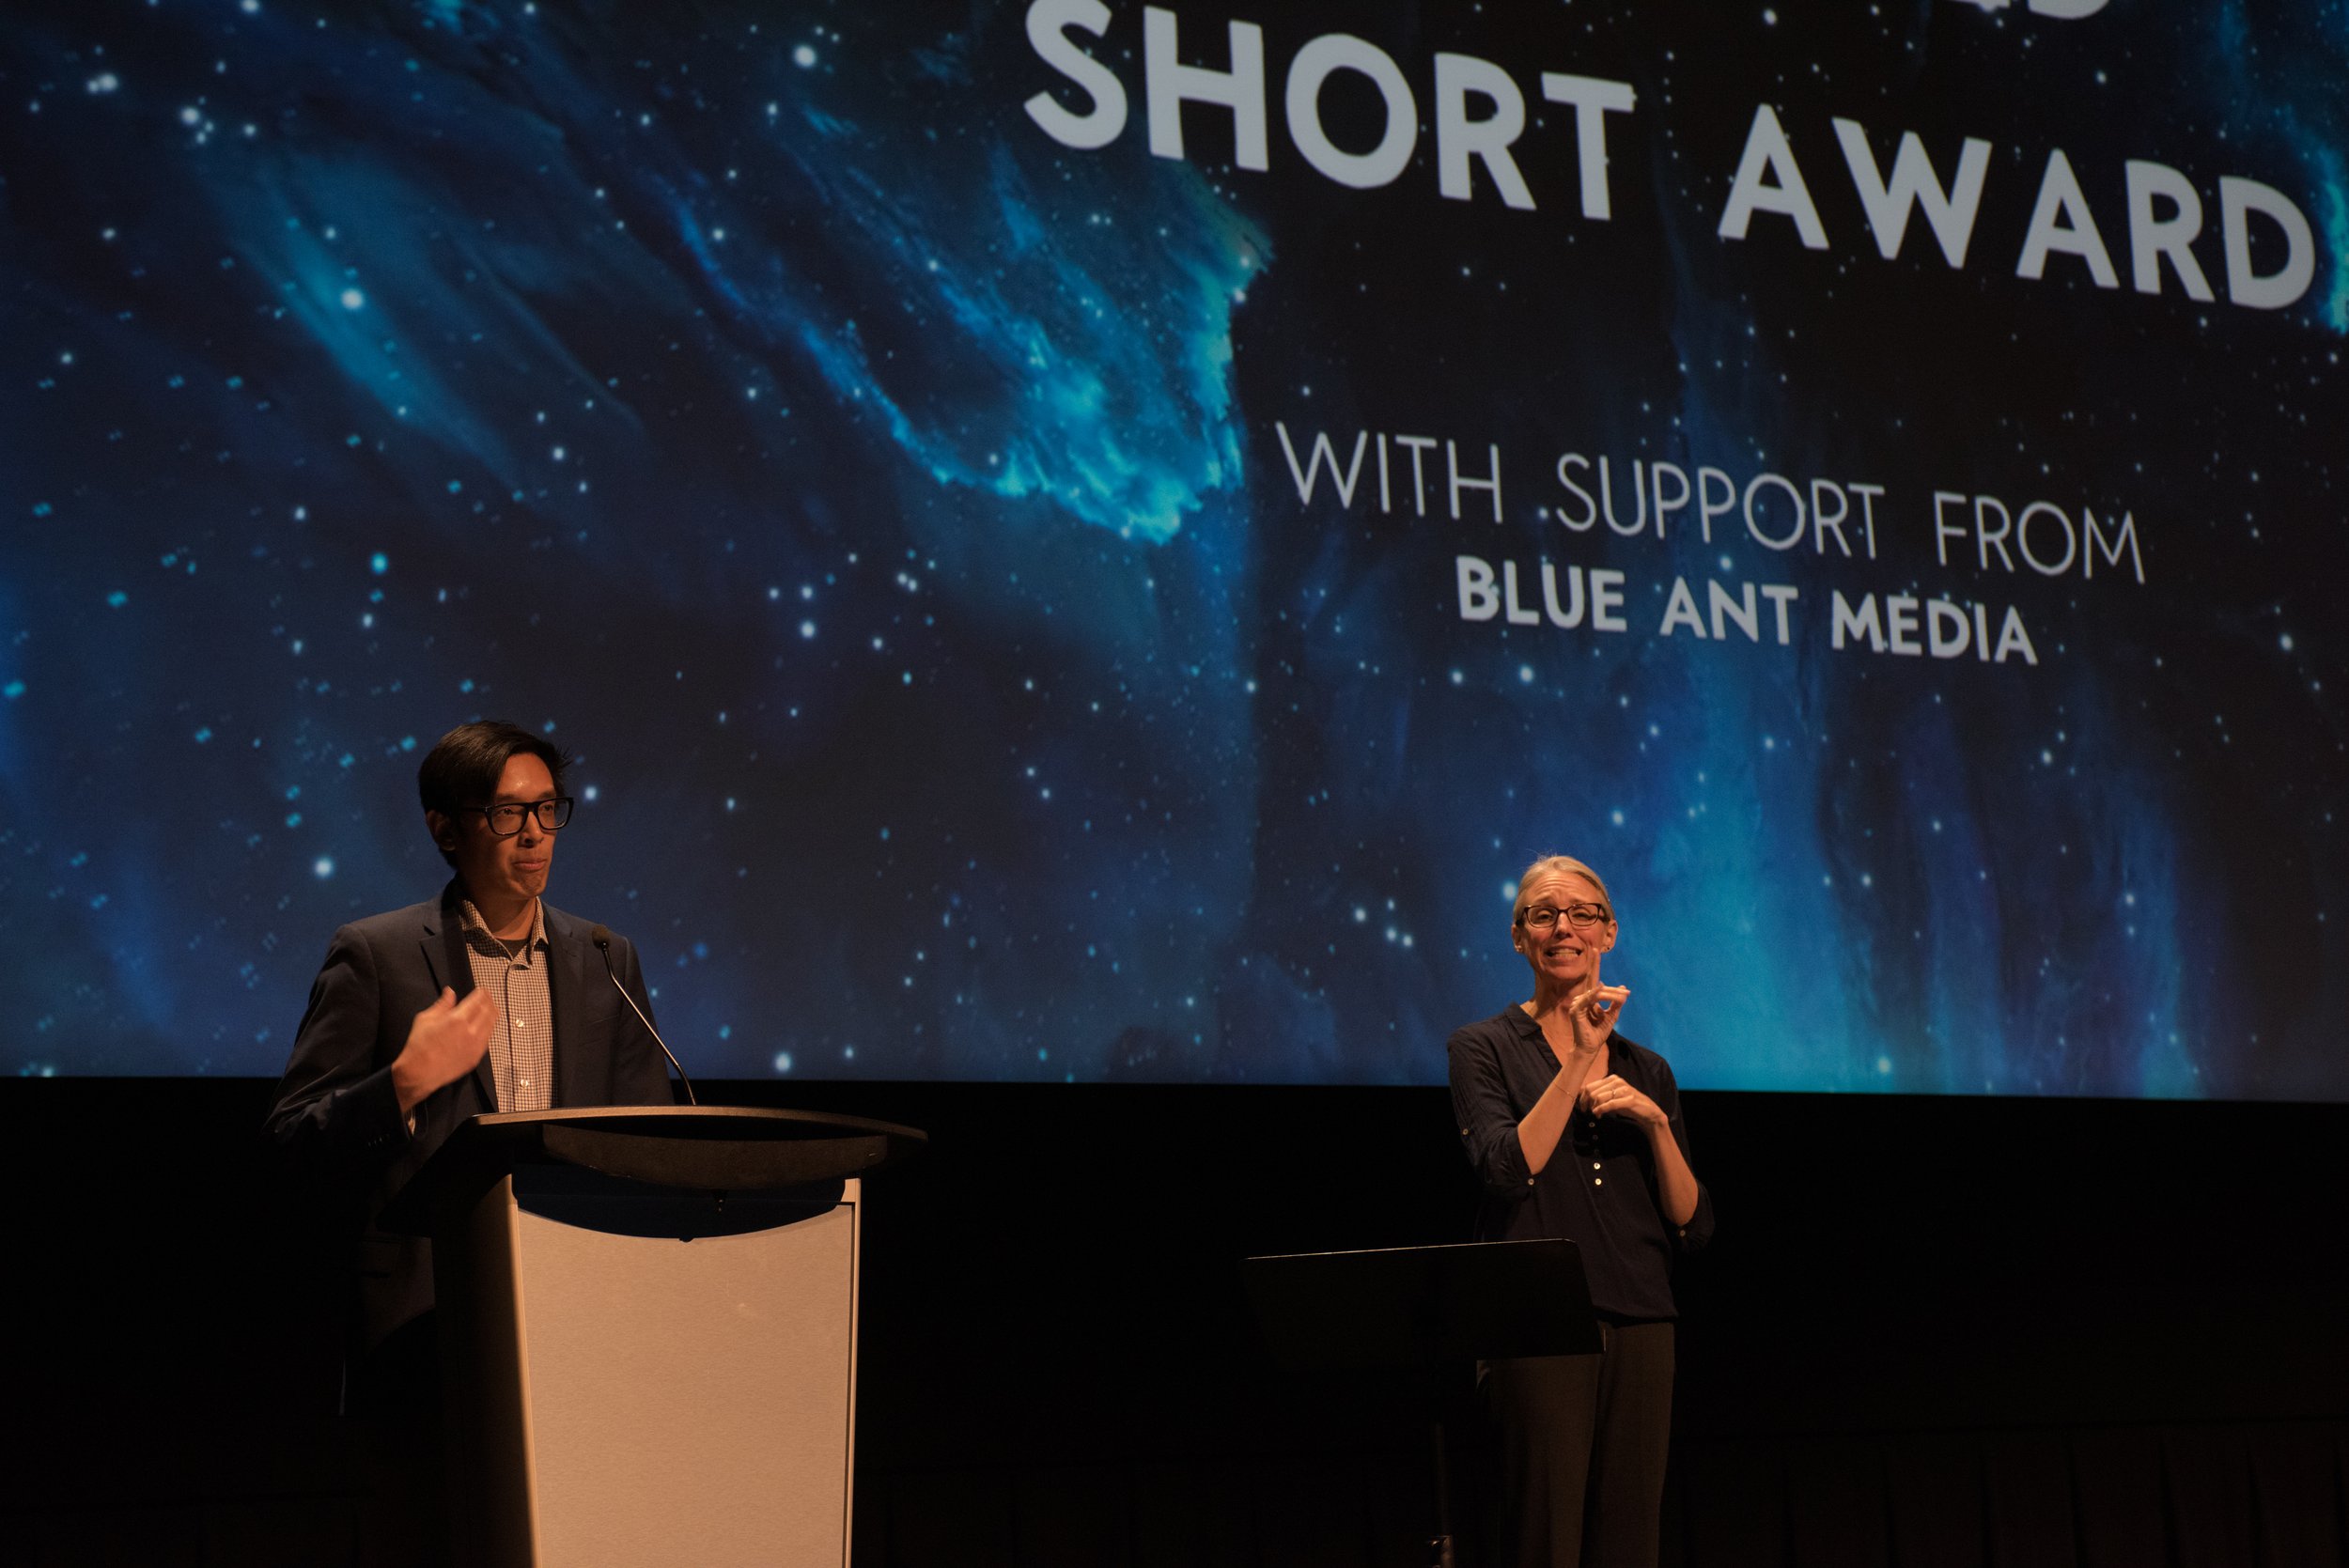 David Morrison, Associate Director at imagineNATIVE, presenting the Animated Short Award. Image by Pengkuei Ben Huang.